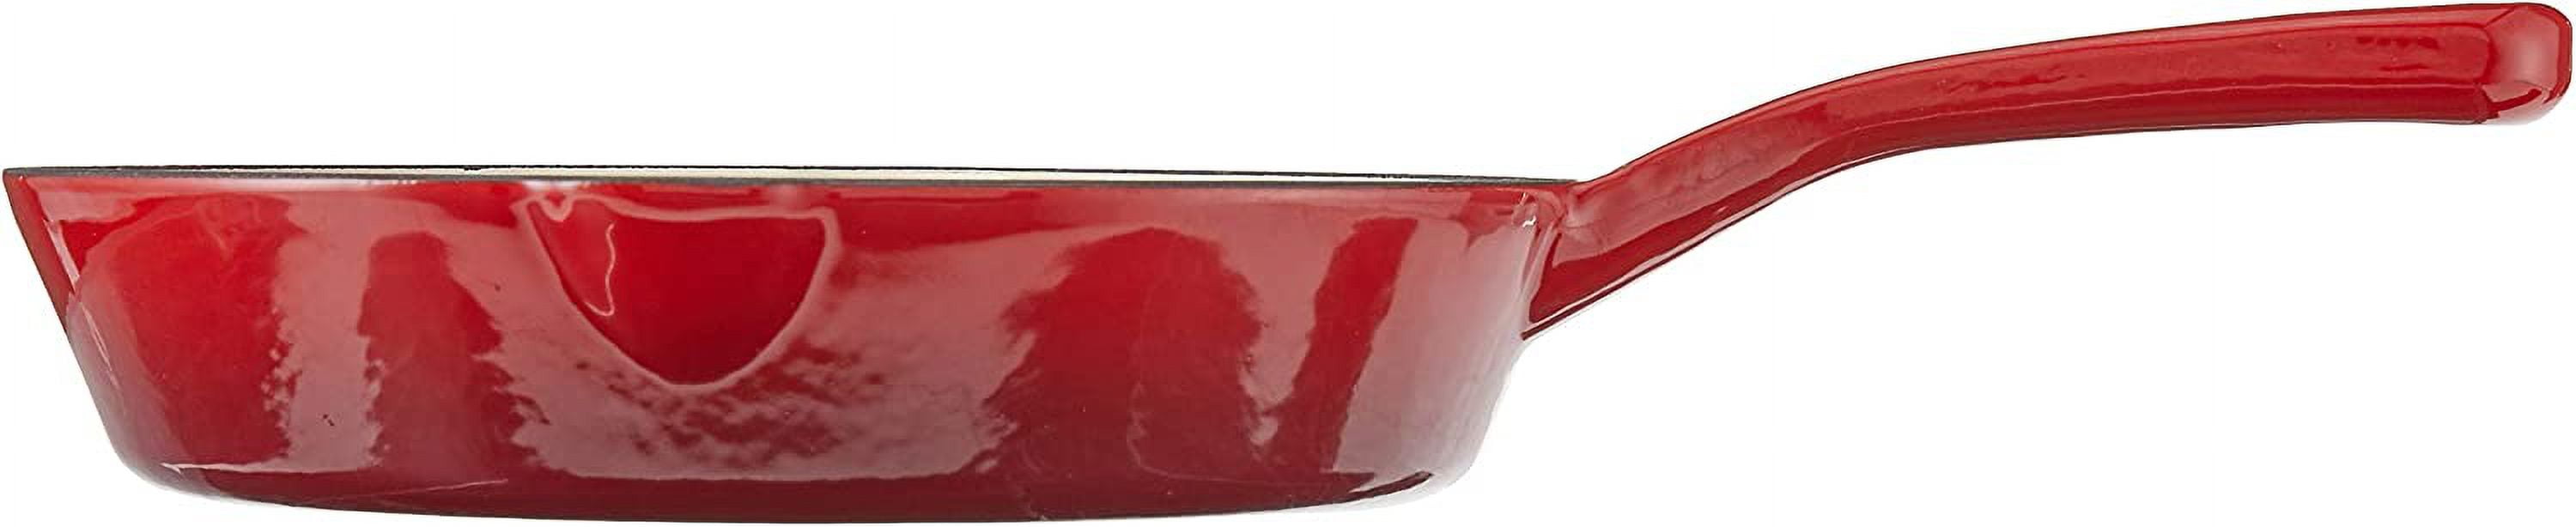 Crock Pot Zesty Flavors Enameled 8 Round Cast Iron Skillet in Scarlet Red  - 9160715